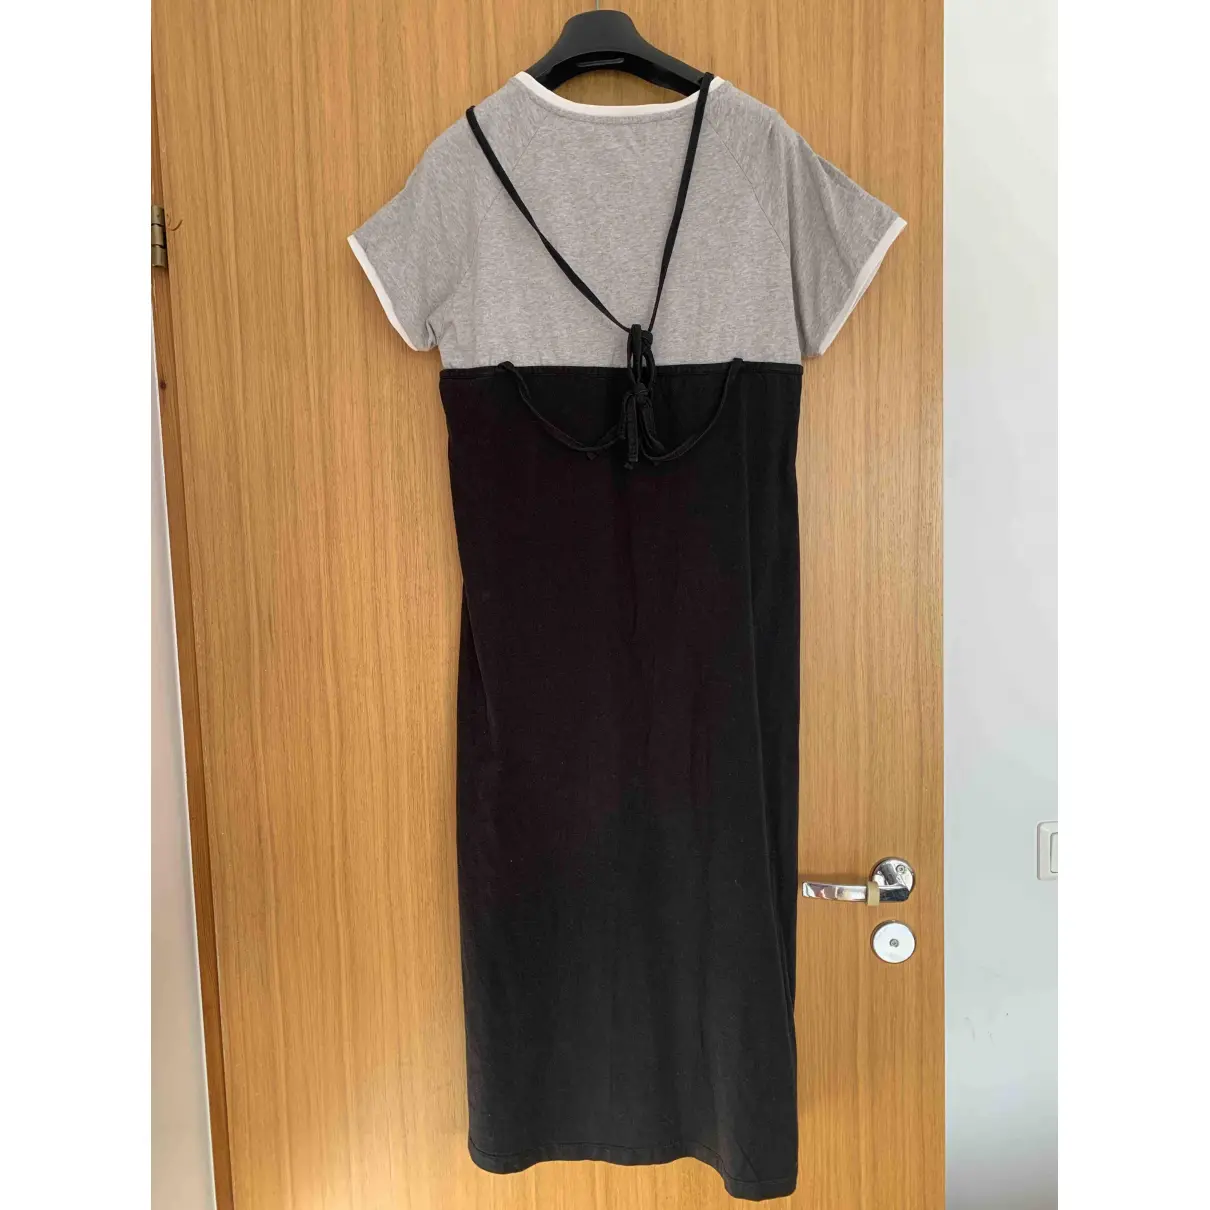 Buy Kenzo Mid-length dress online